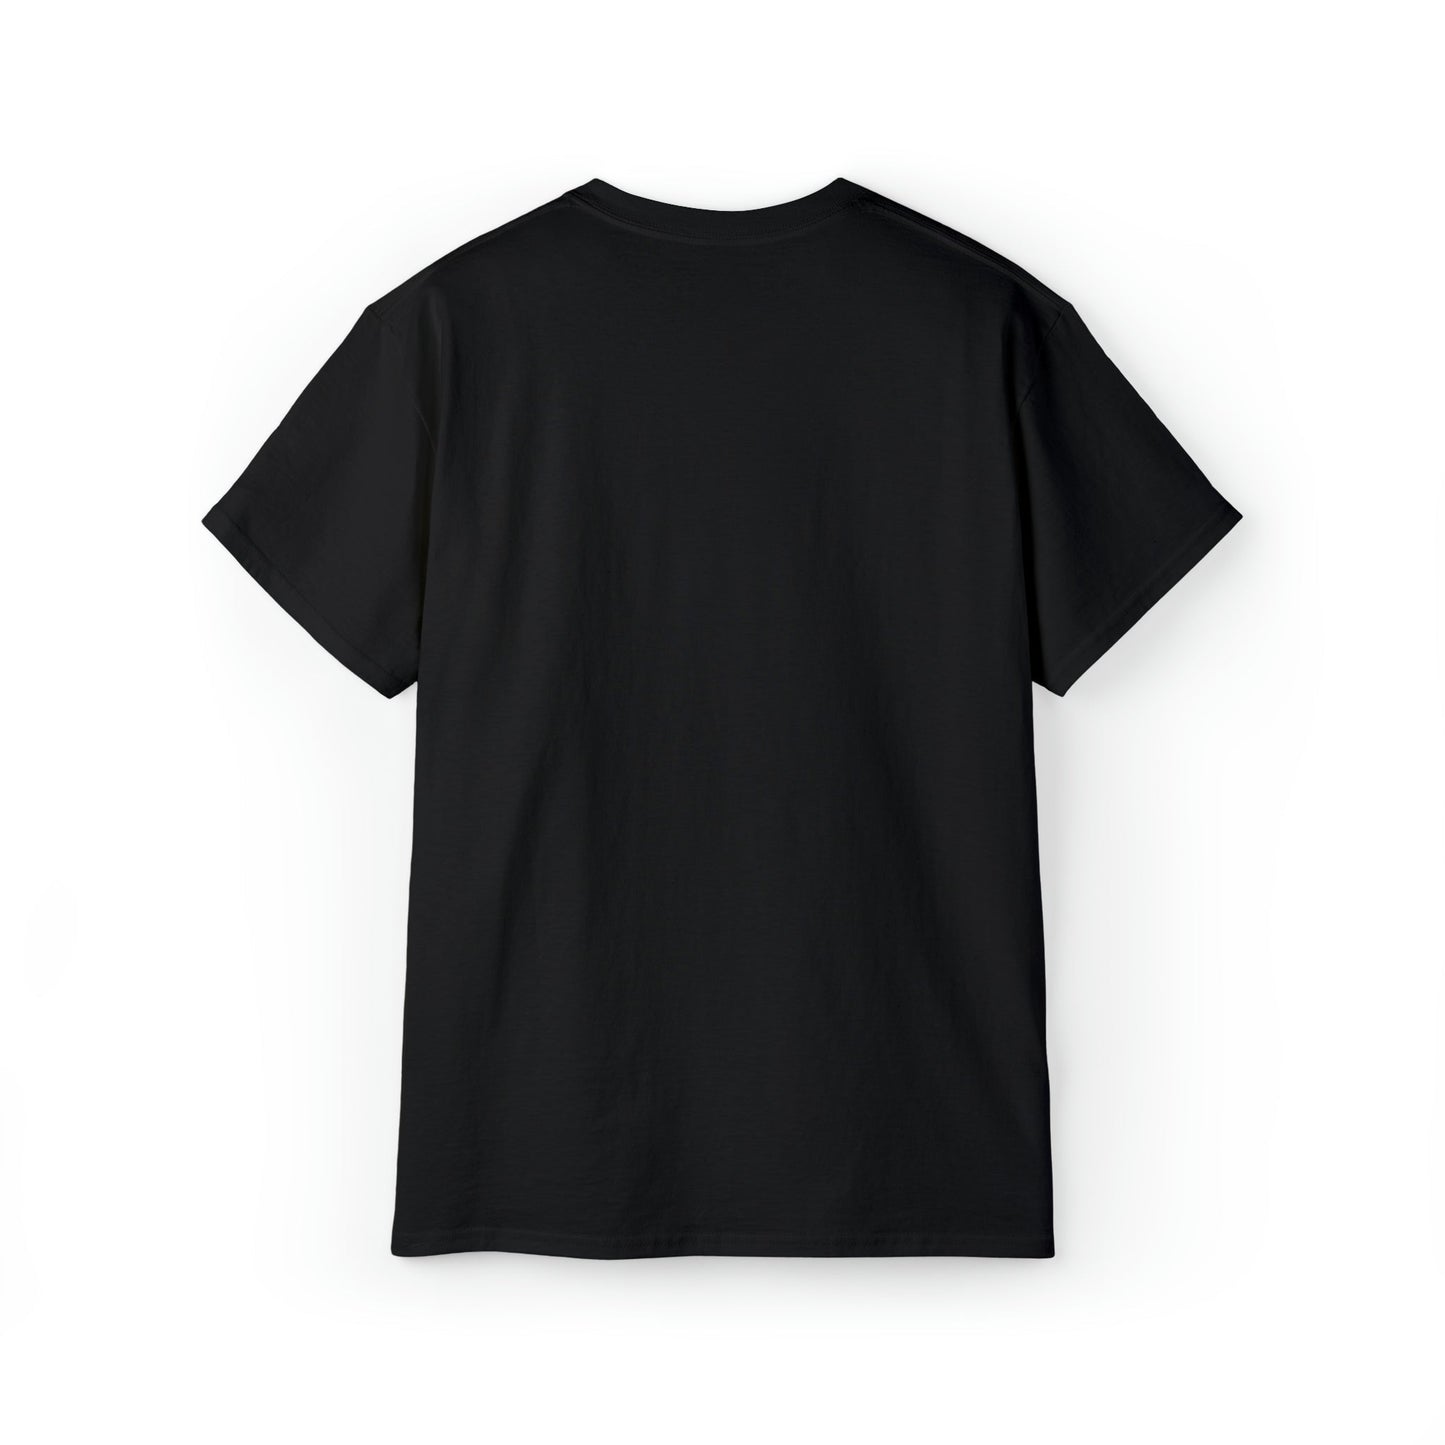 Printify T-Shirt Othala Rune V.K.N.G™  T-shirt